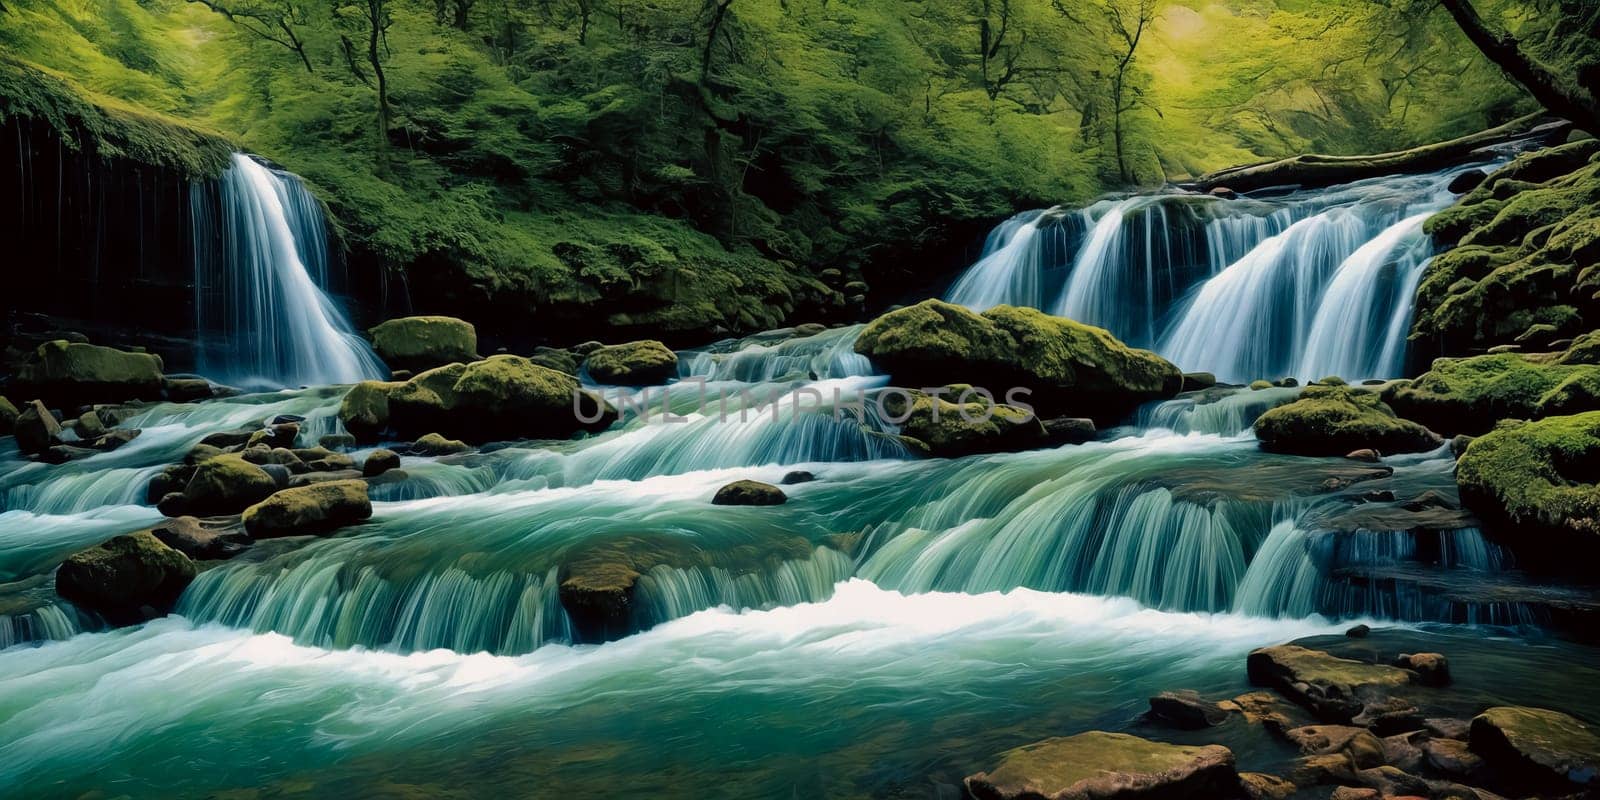 The natural wonder of cascading waterfalls, tranquil streams, by GoodOlga